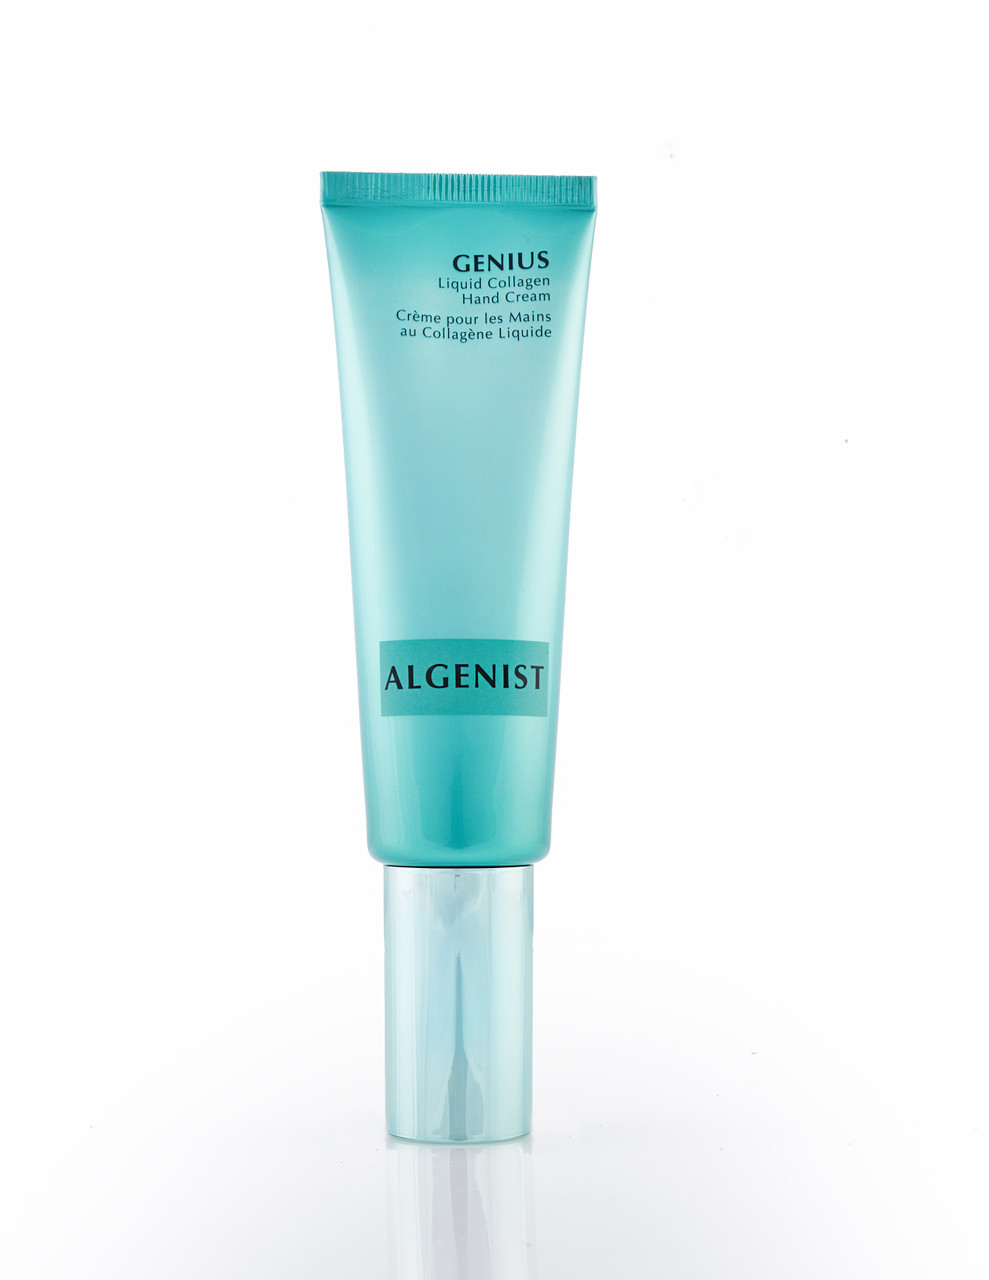 Algenist GENIUS Liquid Collagen Hand Cream 1.7 oz - BeautyBox Direct